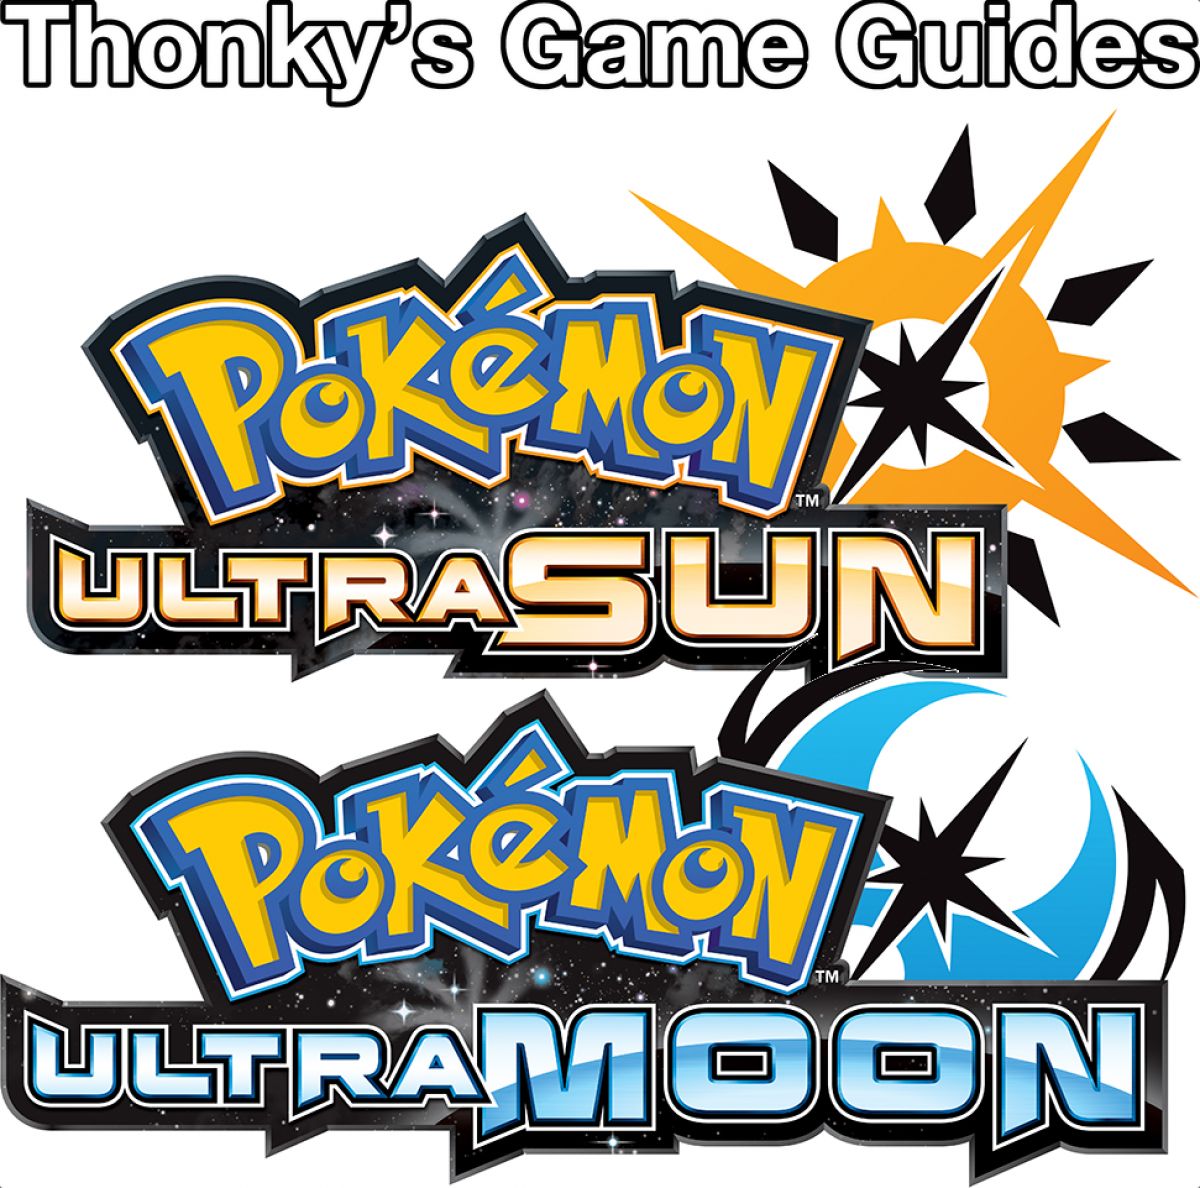 Pokémon Ultra Sun and Pokémon Ultra Moon